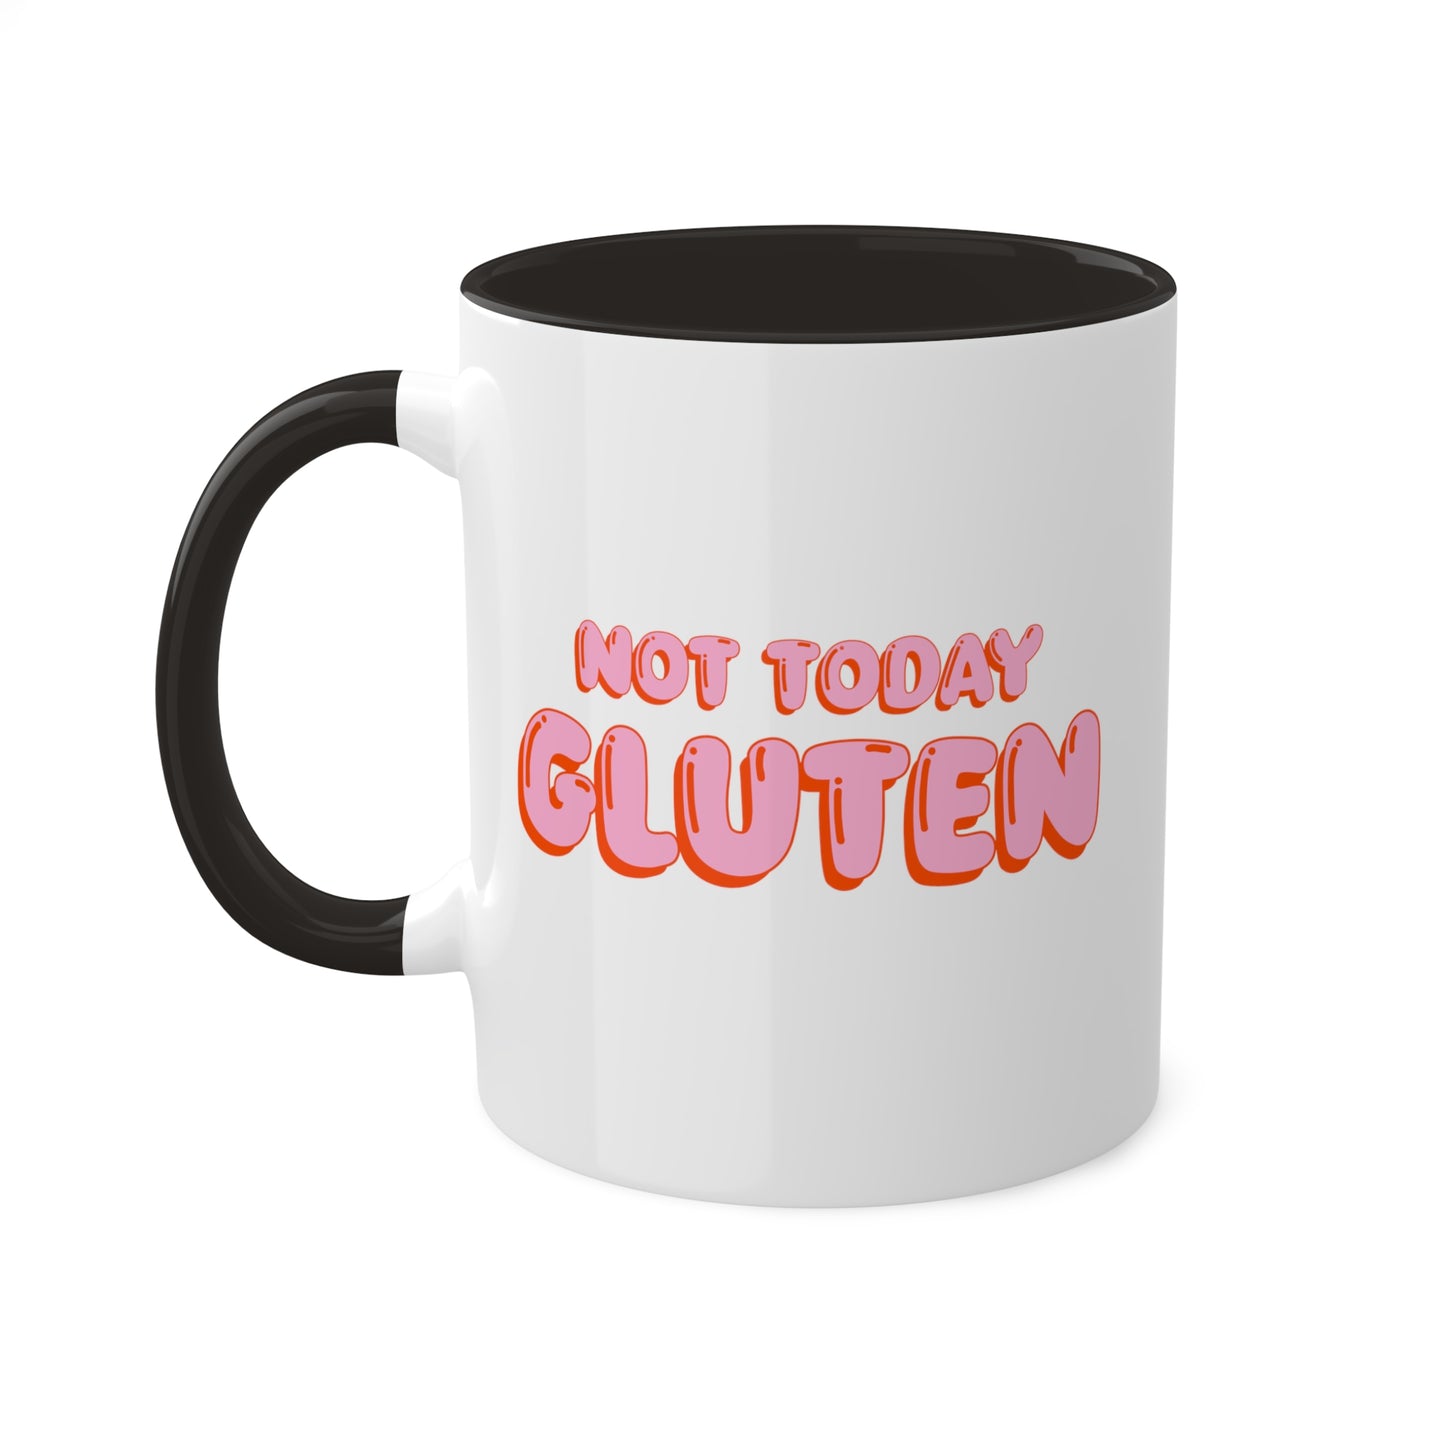 Not Today Gluten Coffee Mug - Funny Gluten-Free Quote Cup, Humorous Foodie Gift, Celiac Awareness Mug, Novelty Ceramic Tea Mug